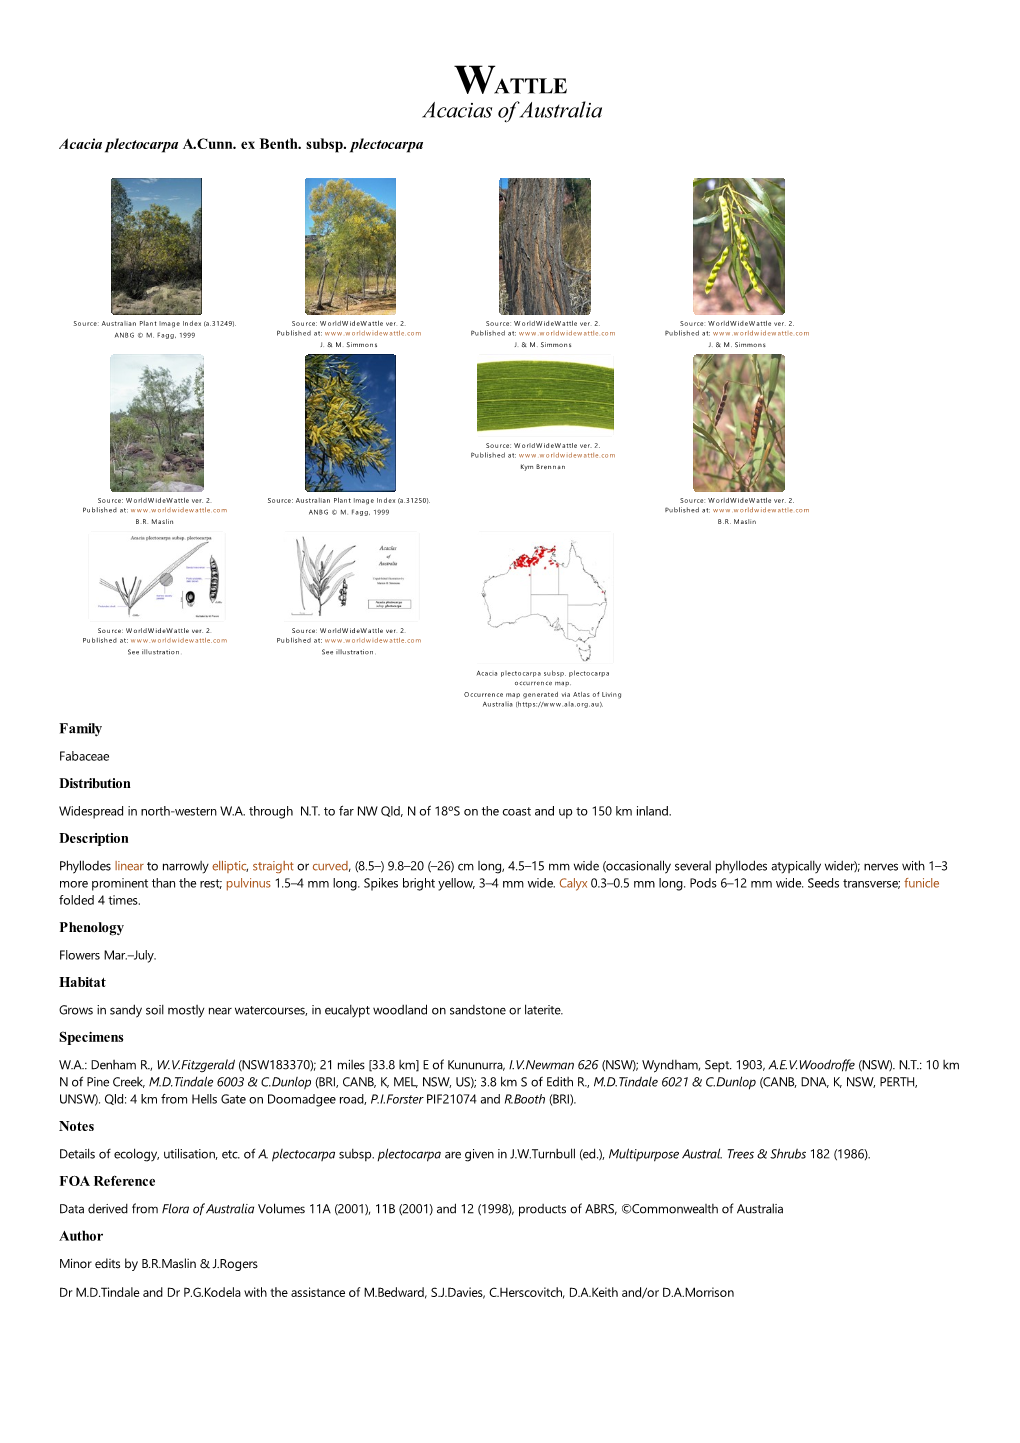 Acacia Plectocarpa Subsp. Plectocarpa Occurrence Map